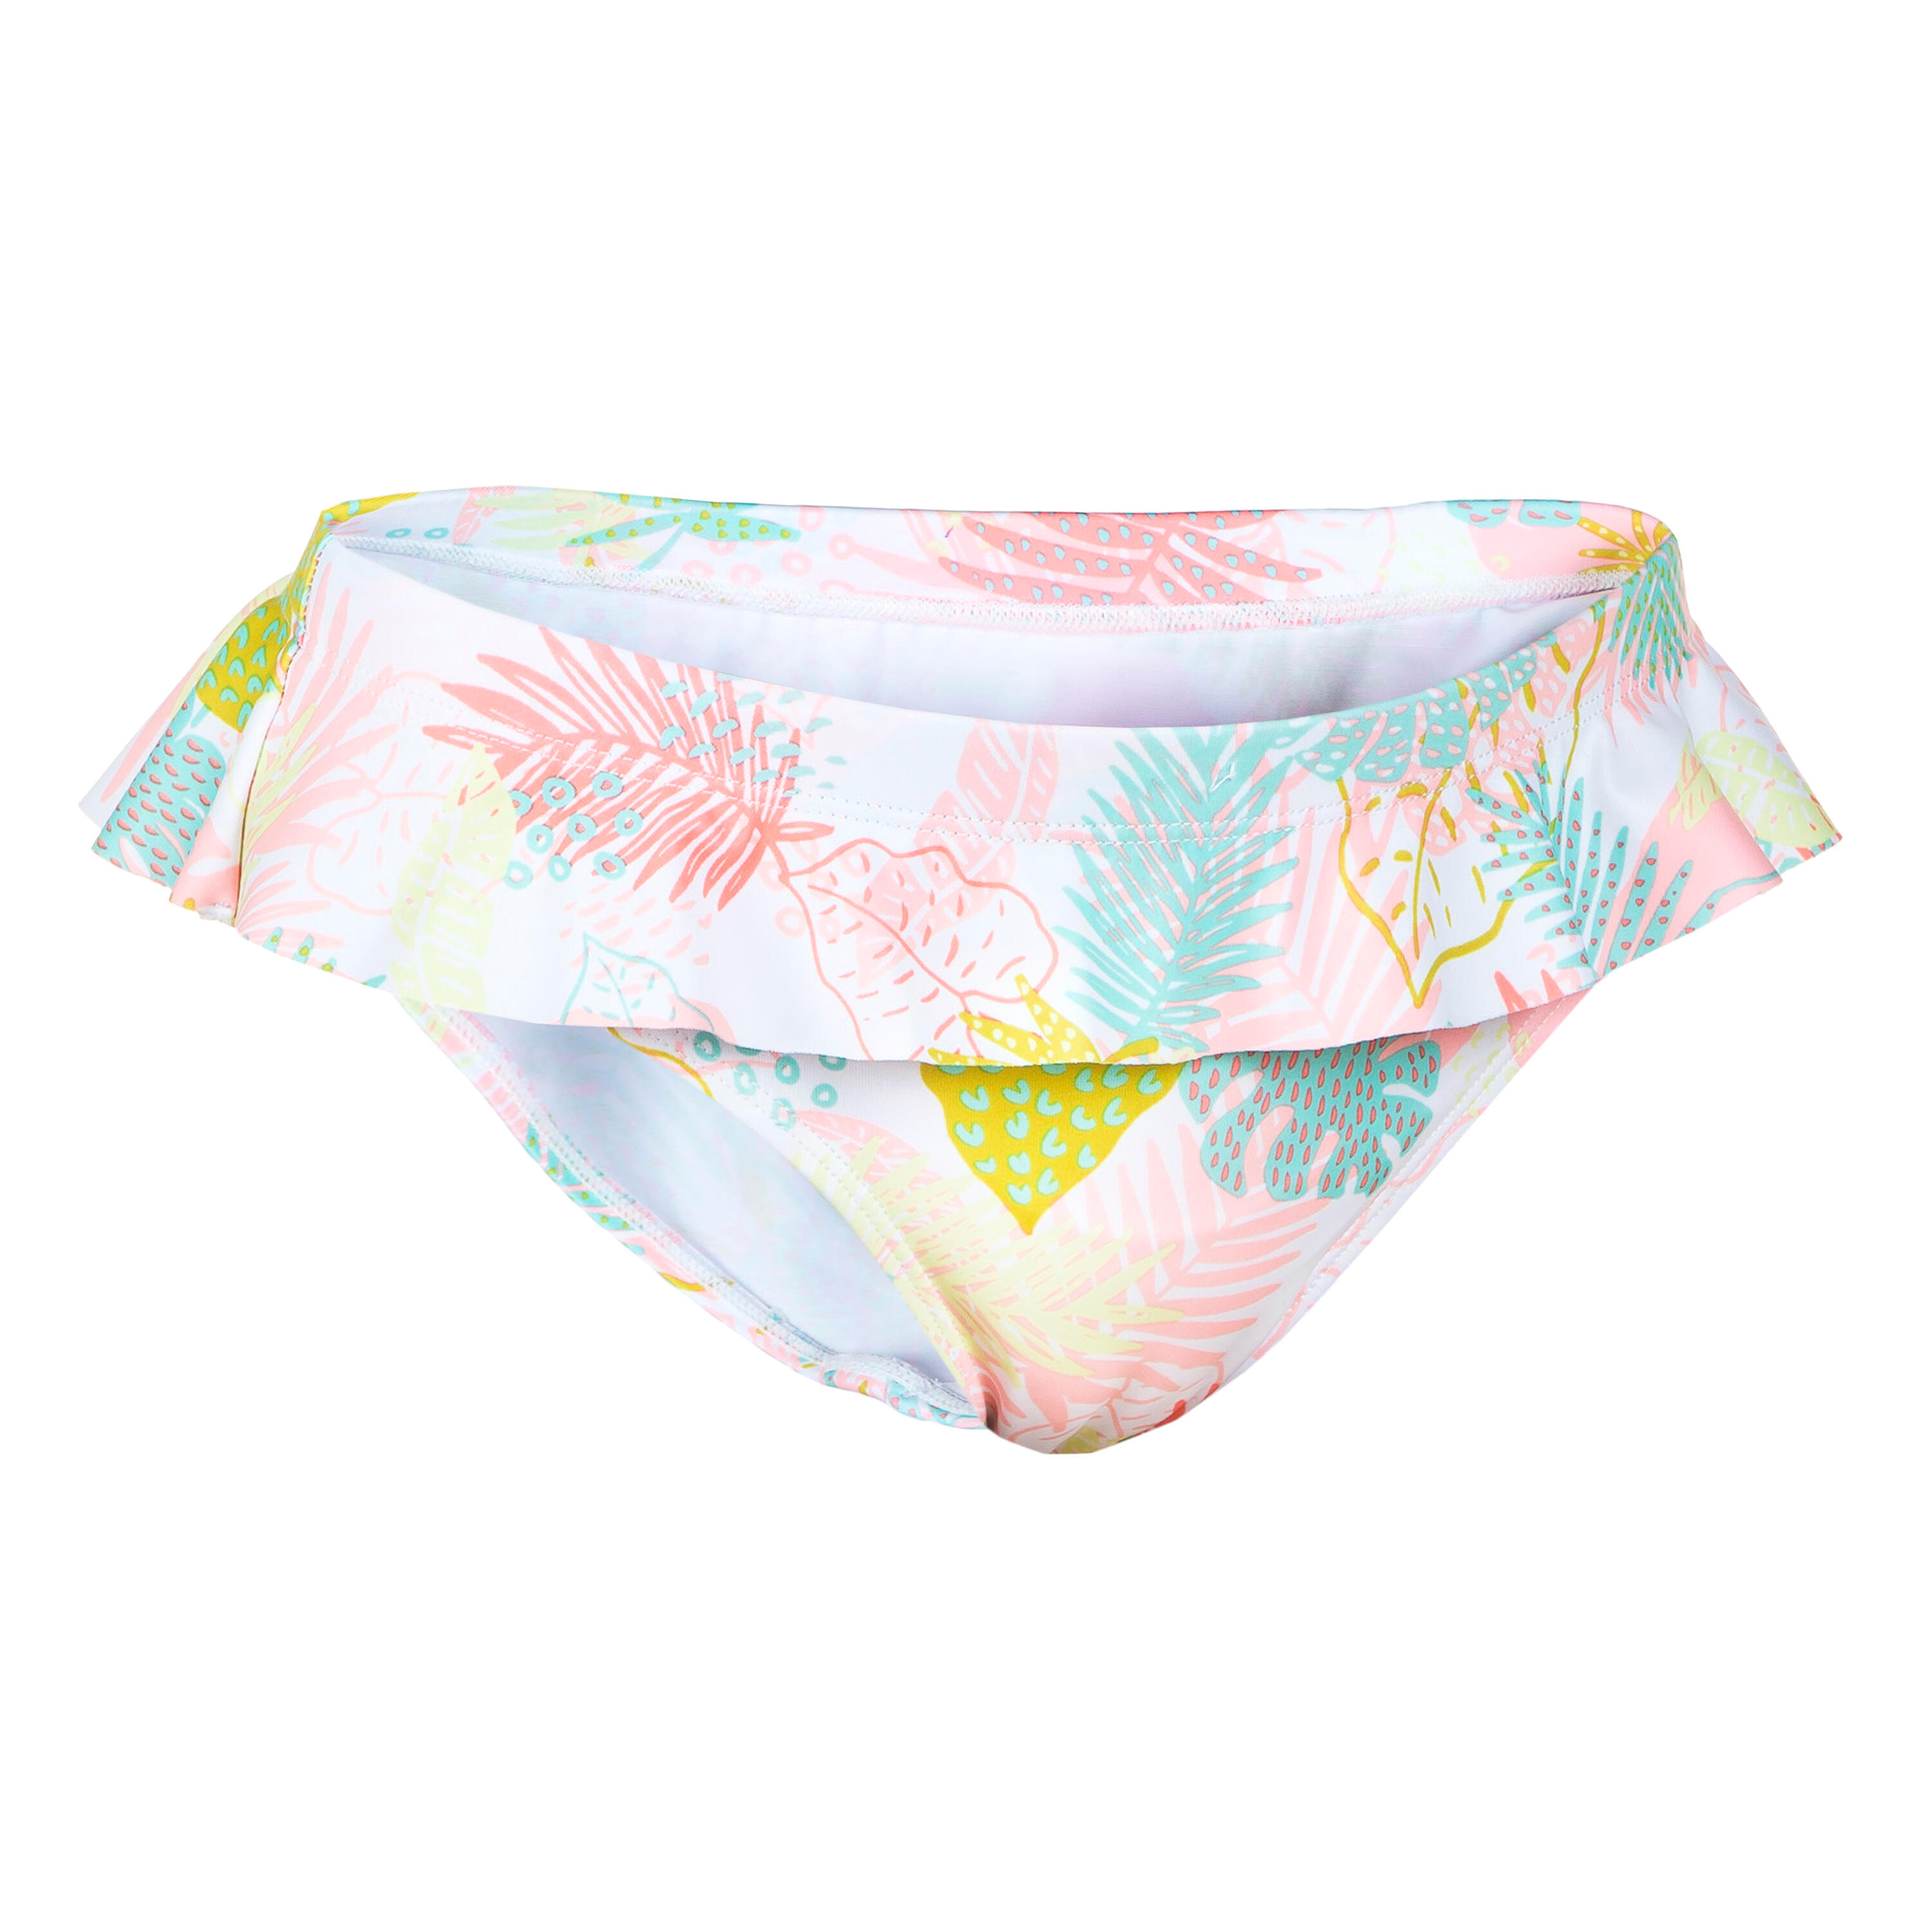 Girls’ Swimming Swimsuit Bottoms Lila - White 6/6